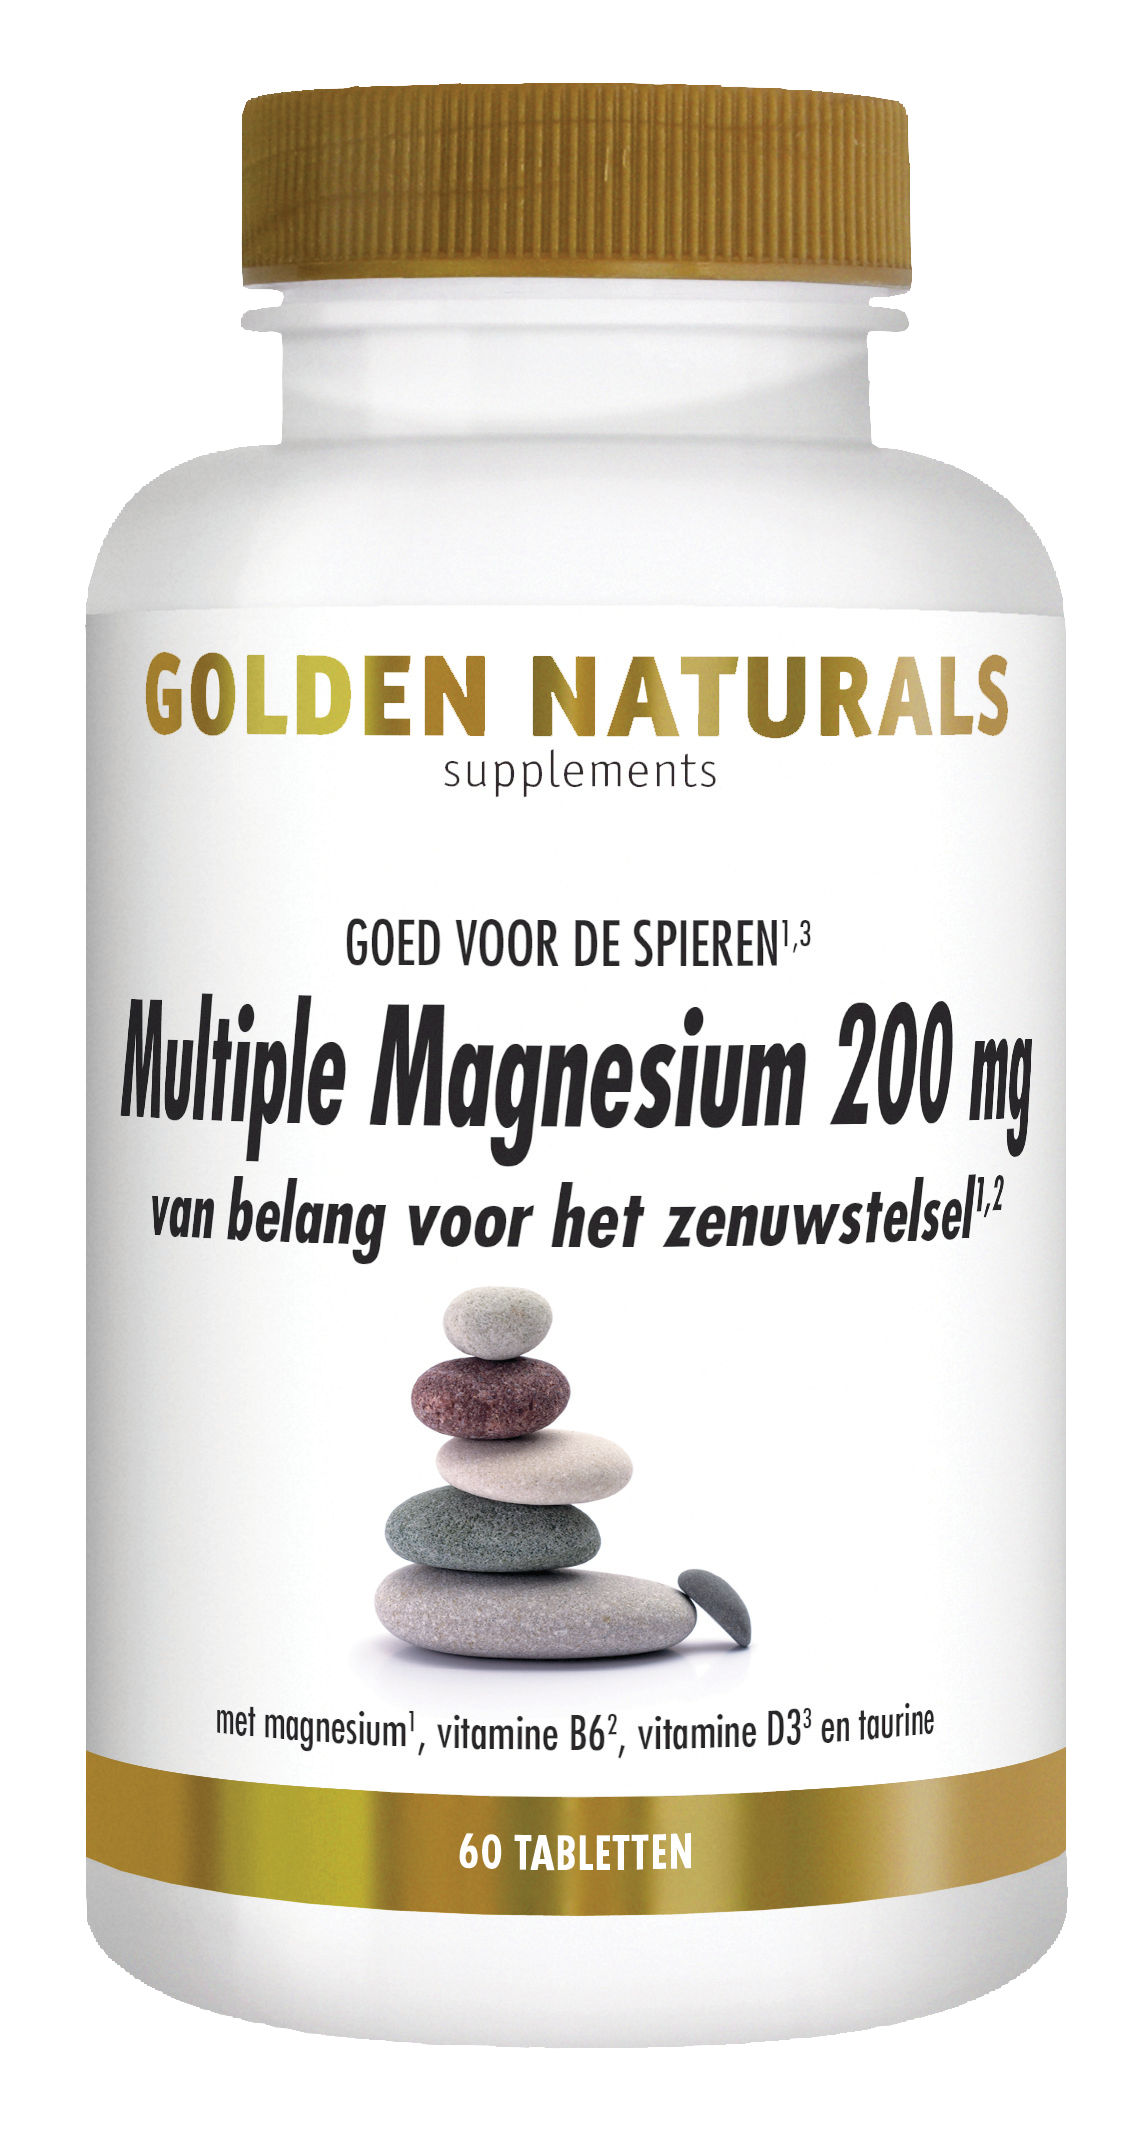 Verloren interval morfine Golden Naturals Multiple Magnesium 200 mg kopen? - GoldenNaturals.nl